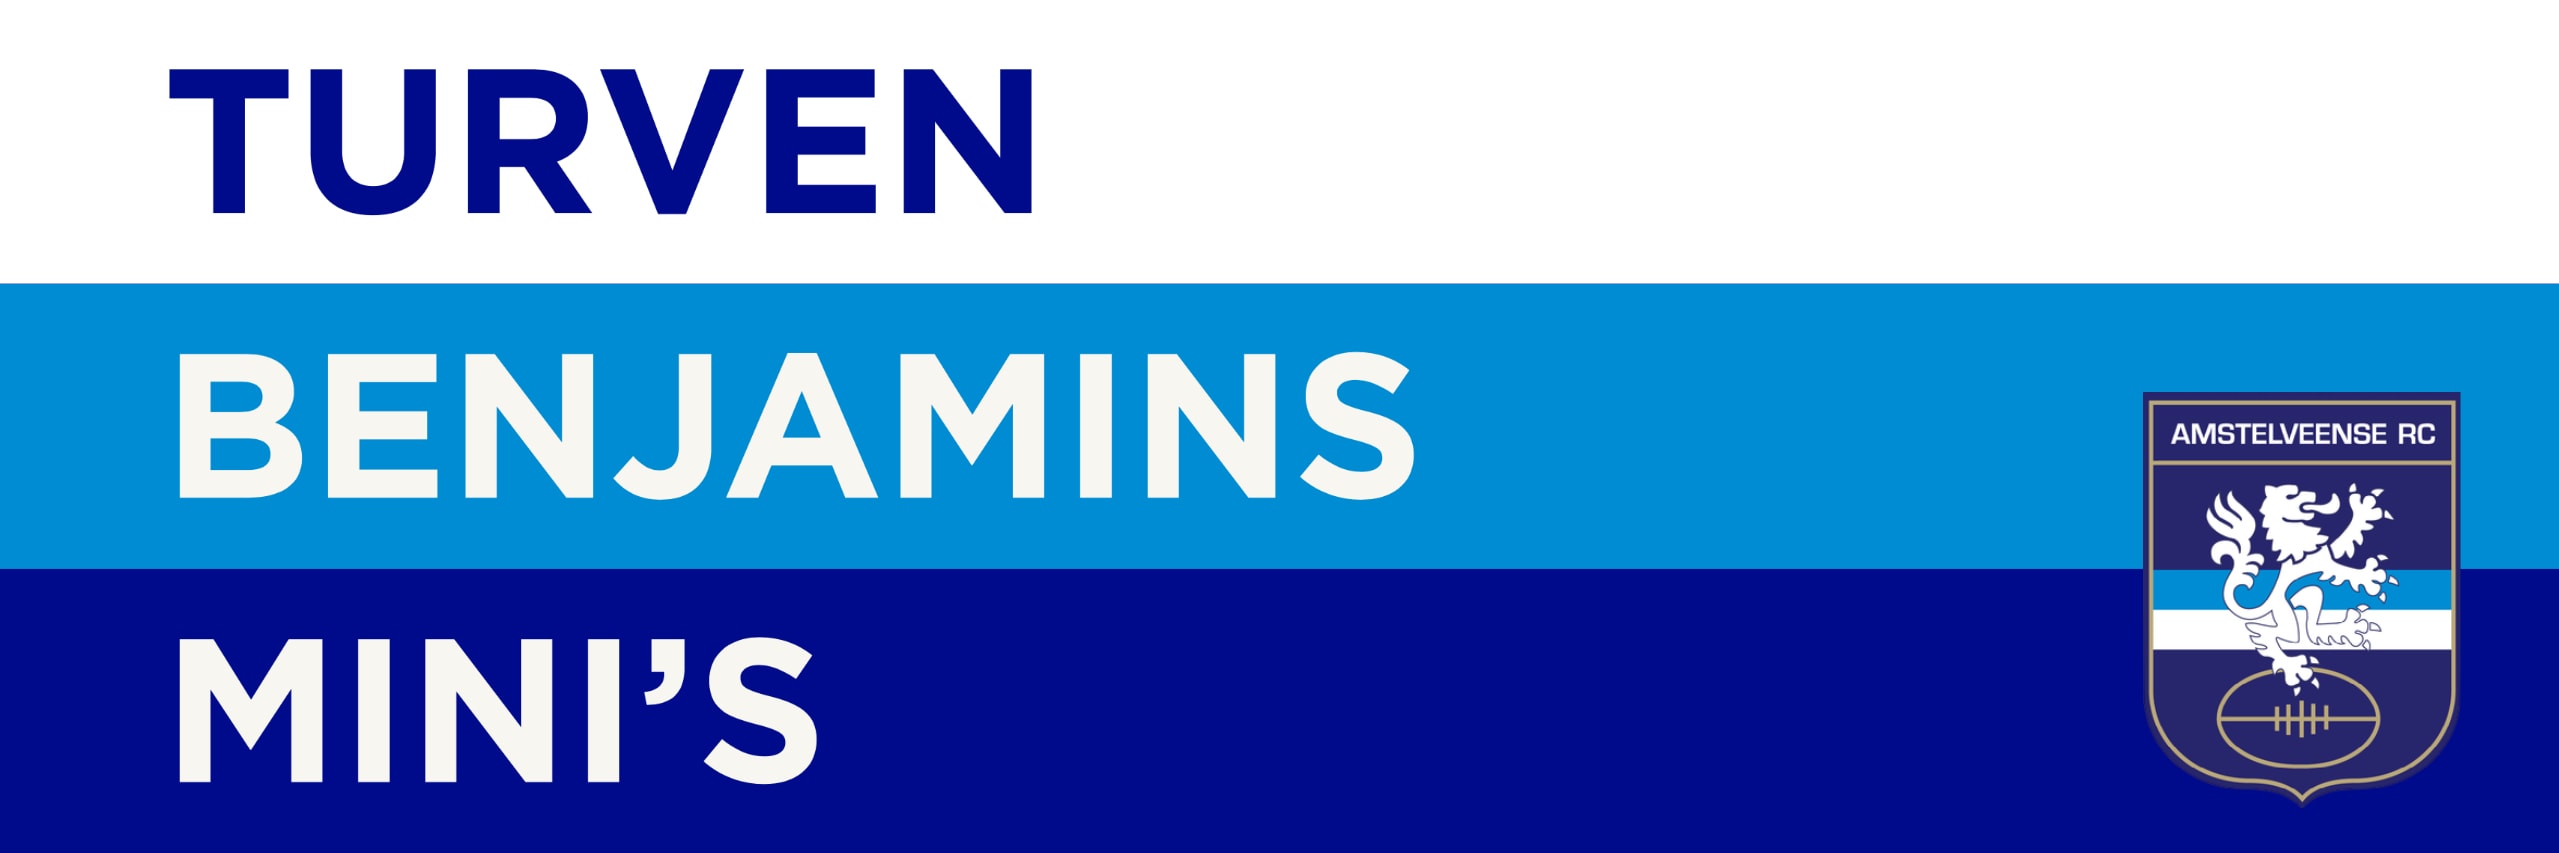 Turven Benjamins mini's banner logo